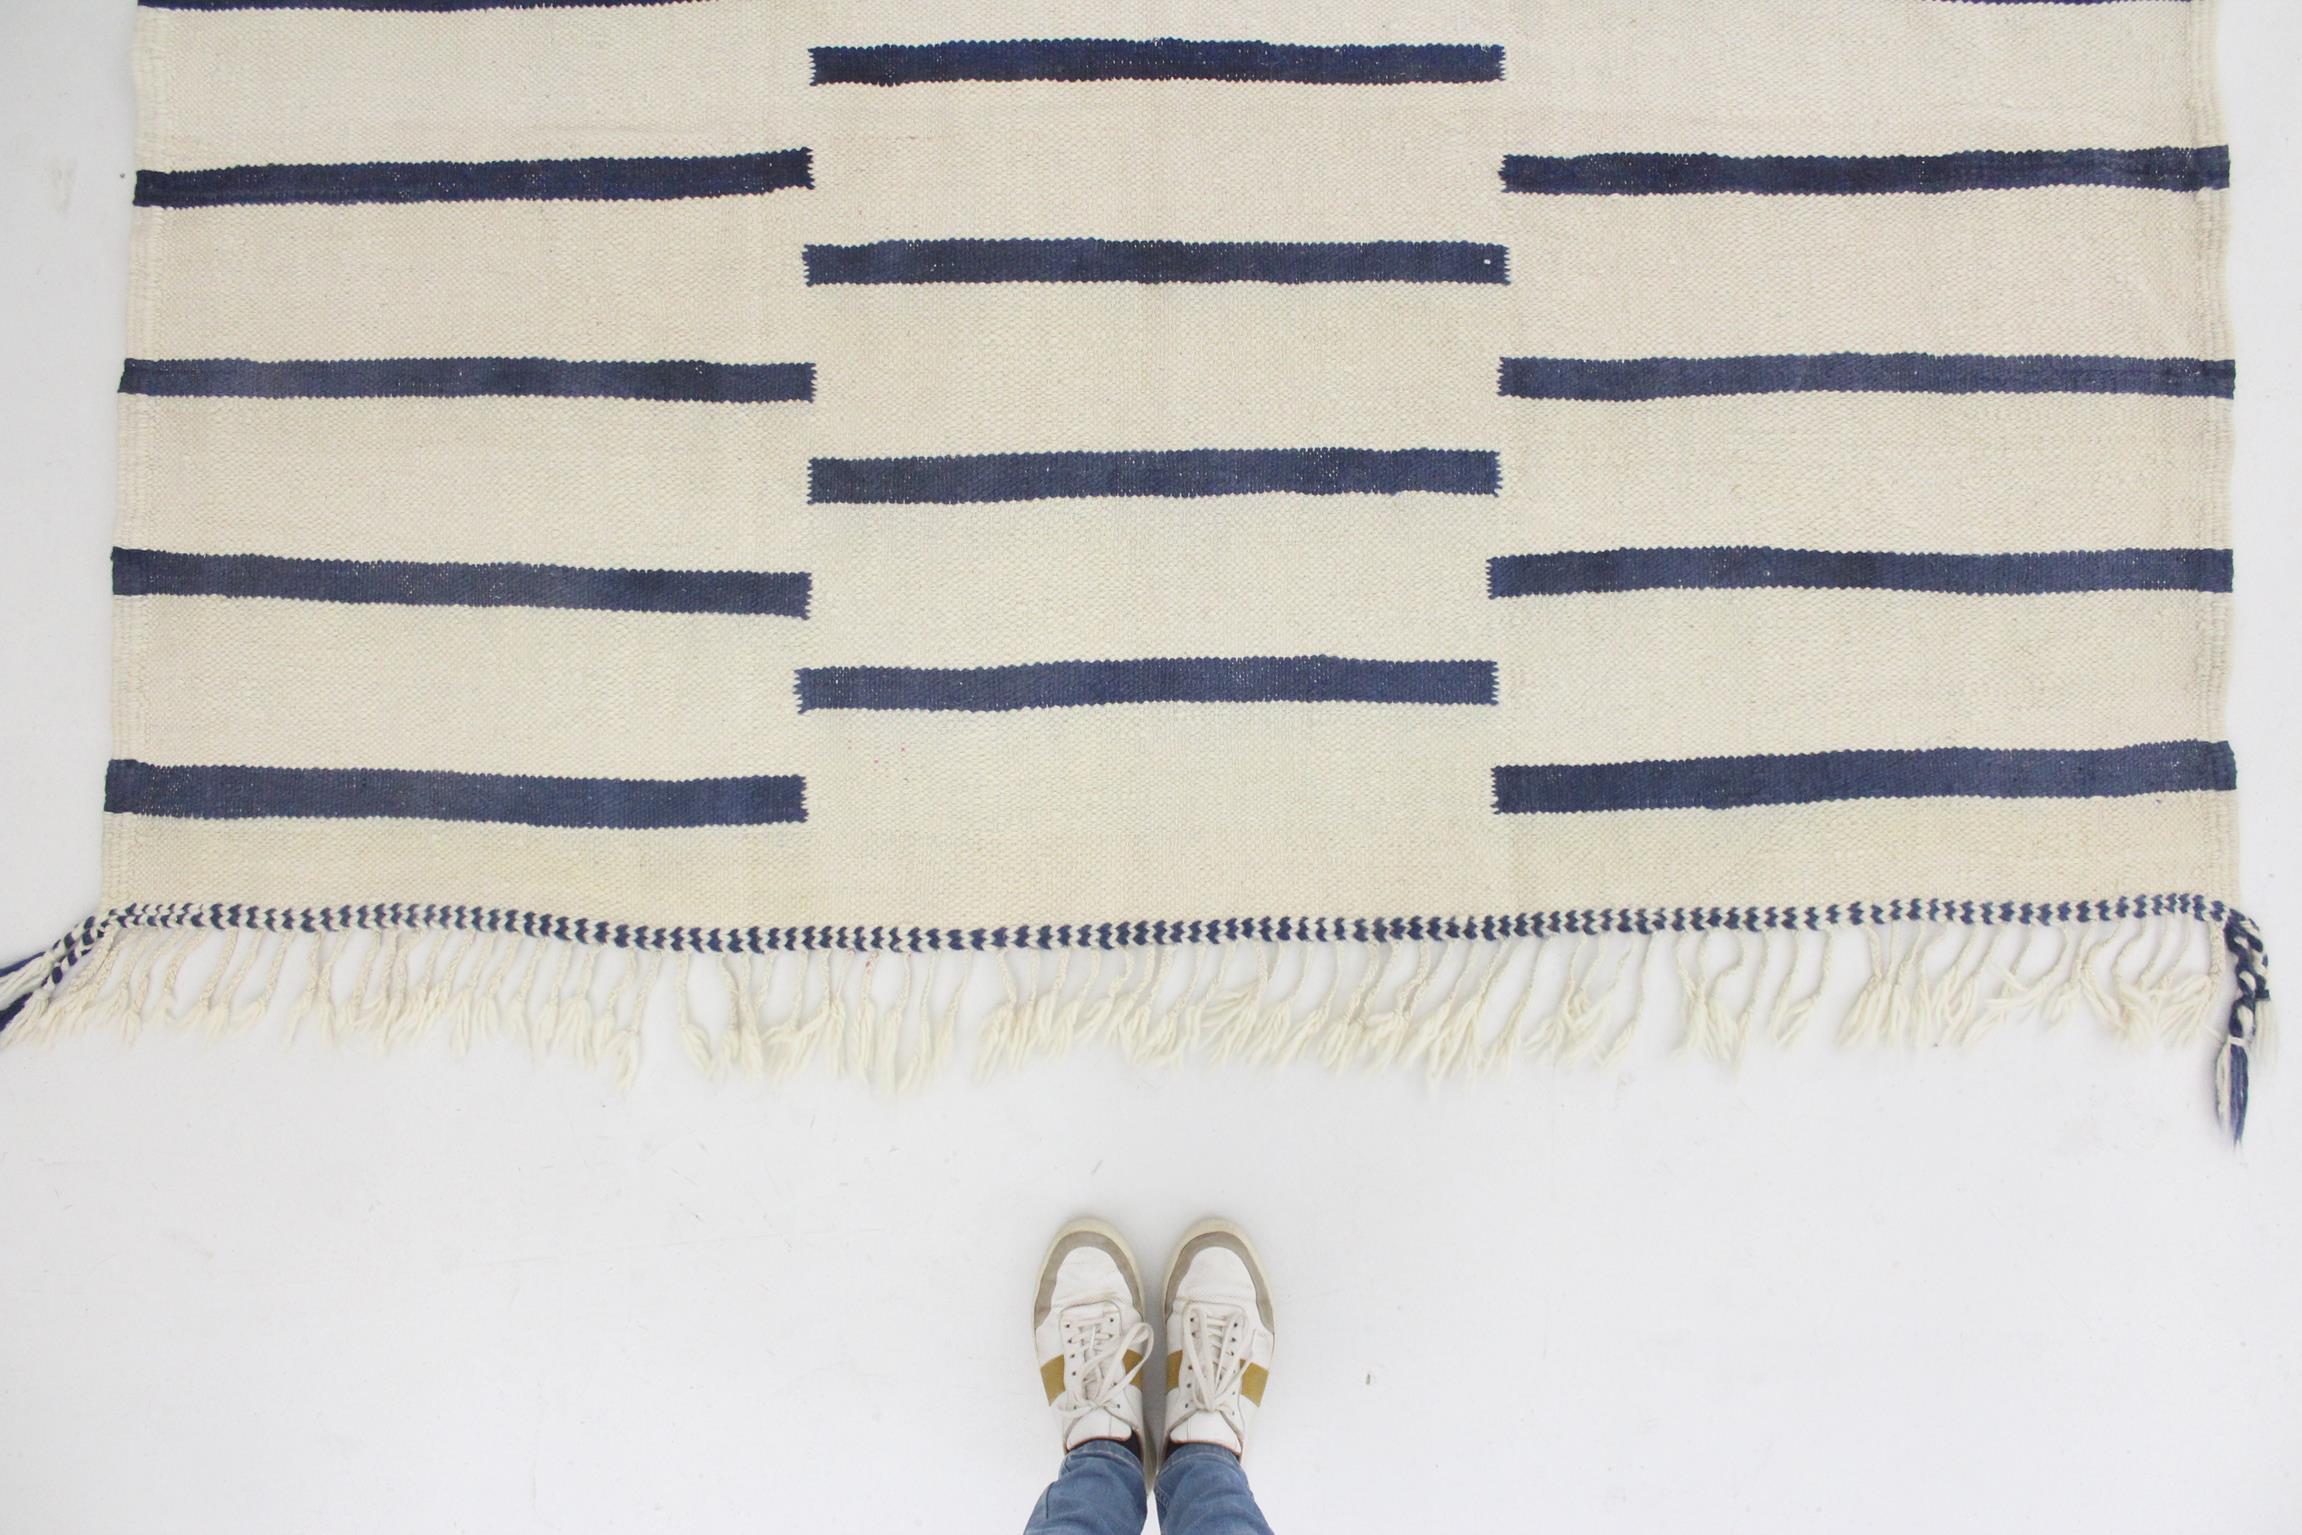 Hand-Woven Modern Moroccan kilim rug - Cream/blue - 6.5x10.6feet / 200x323cm For Sale